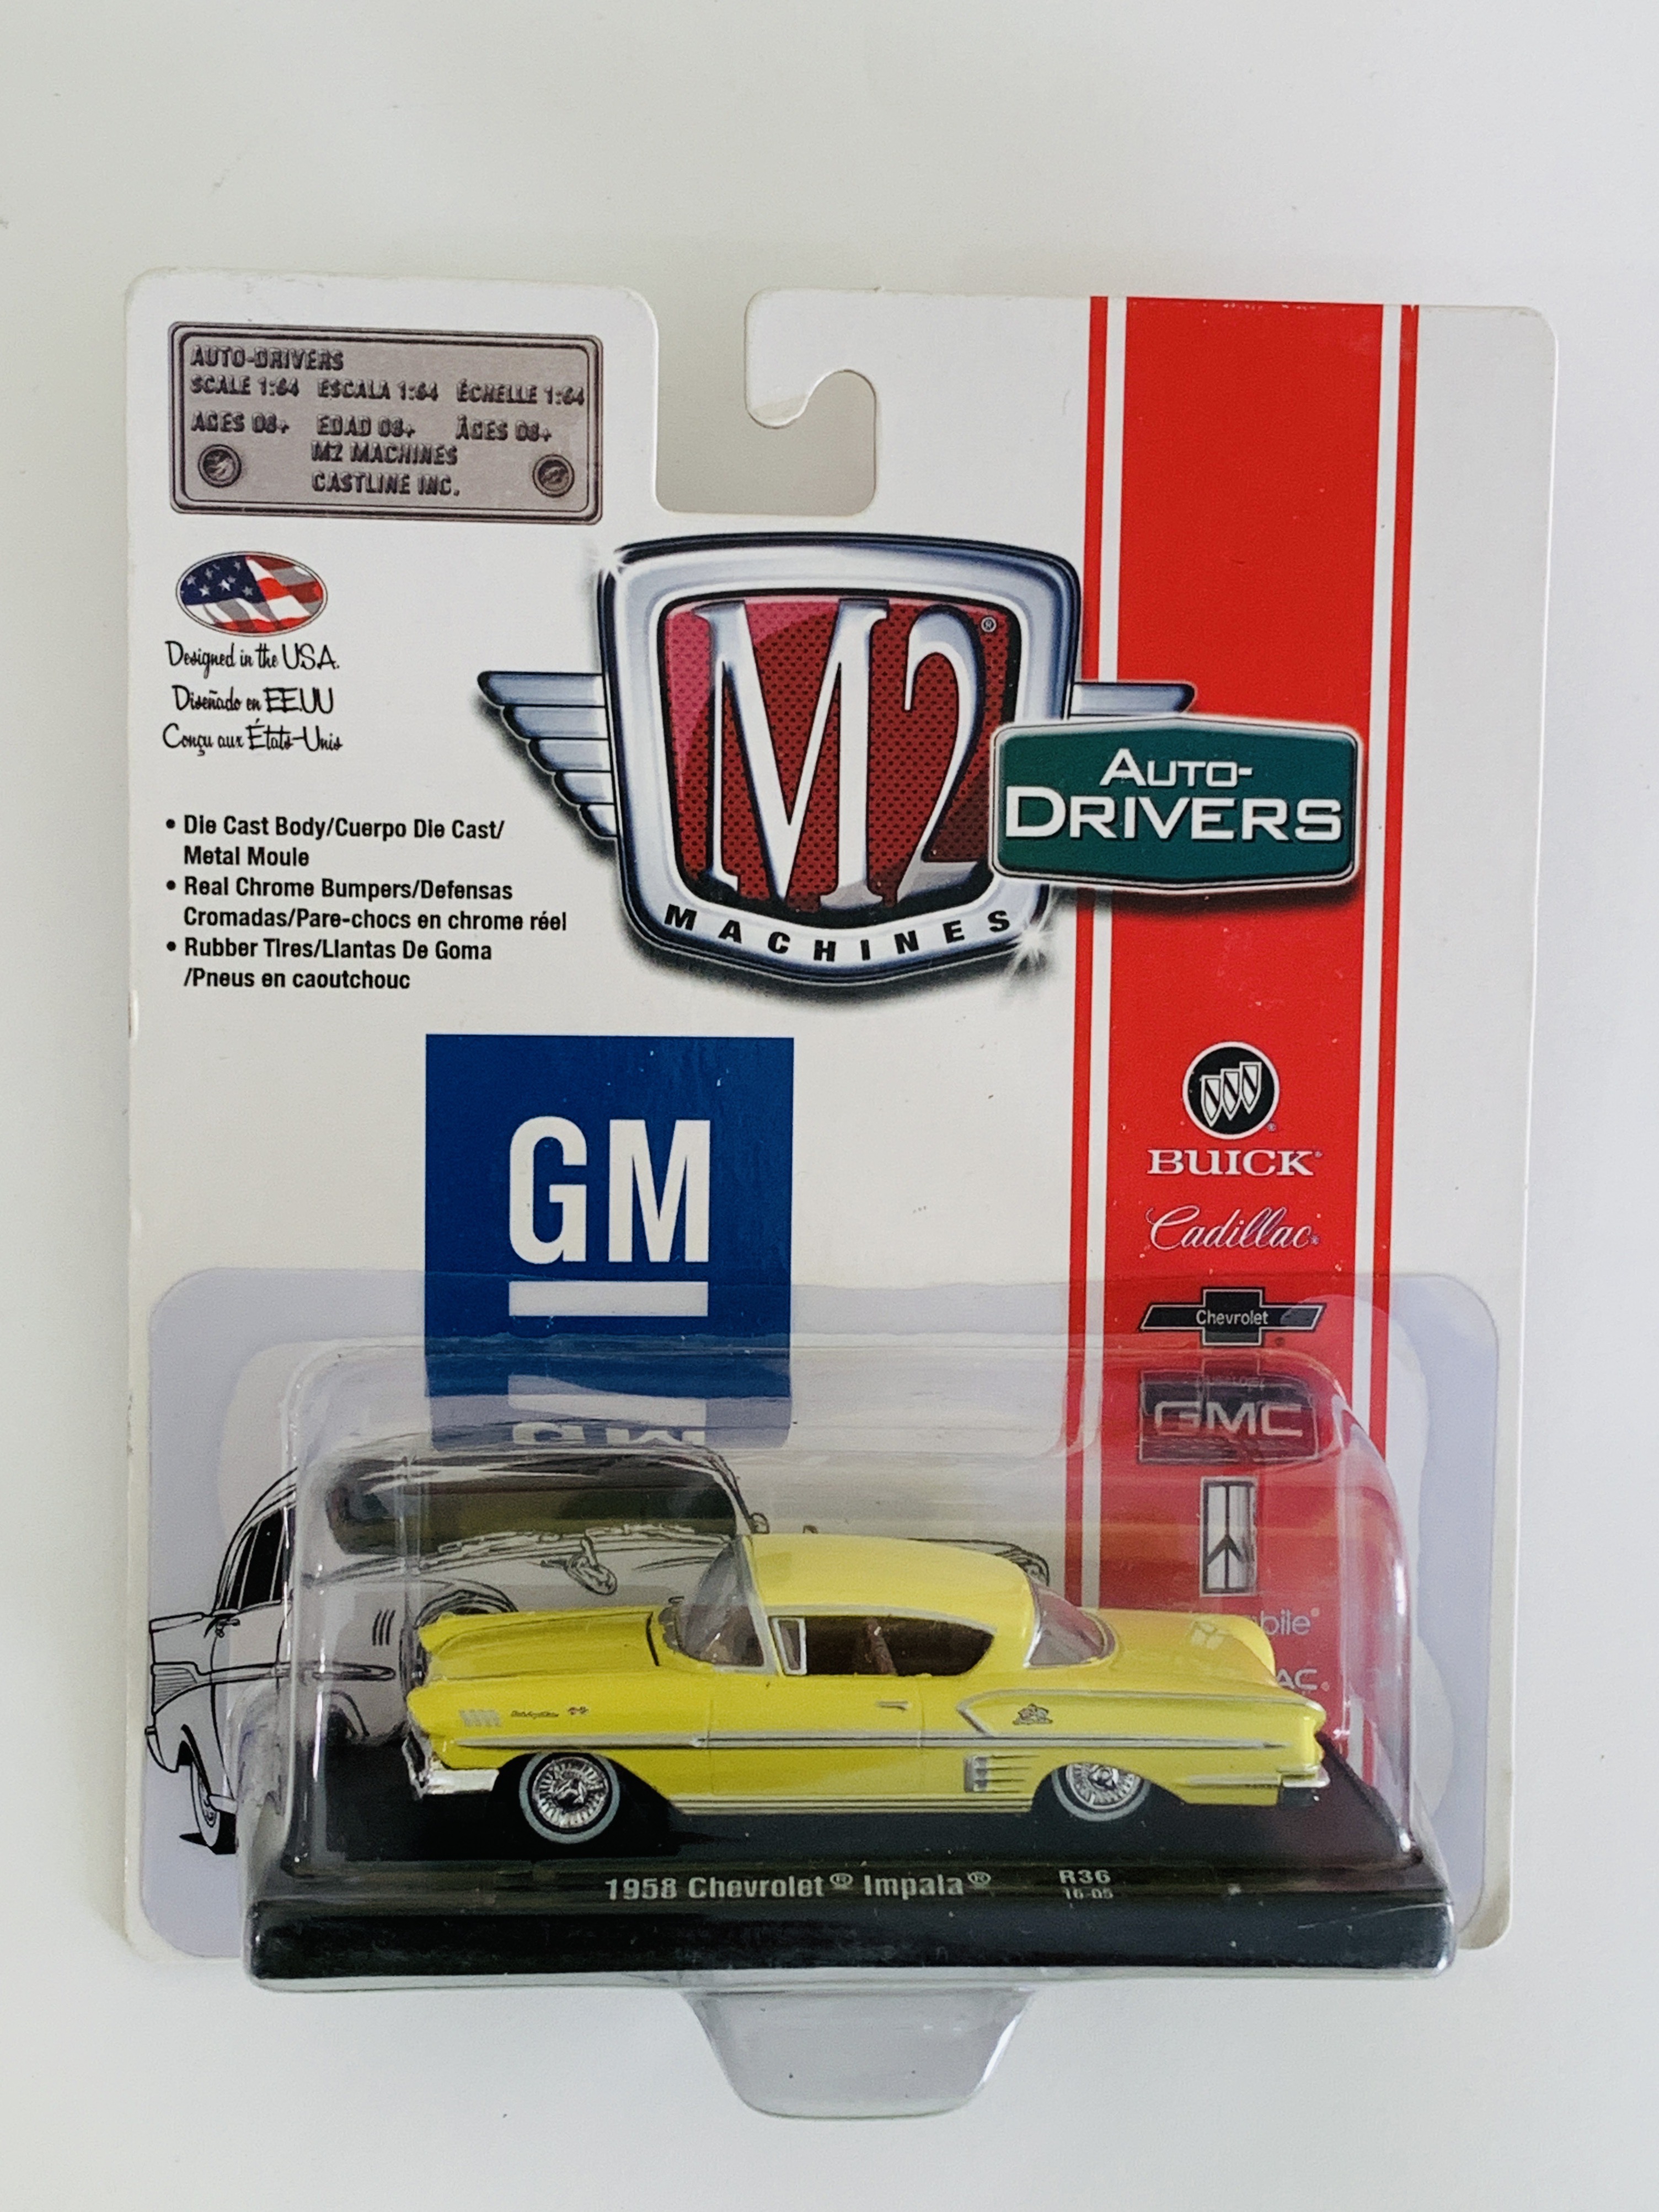 M2 Machines Auto-Drivers 1958 Chevrolet Impala R36